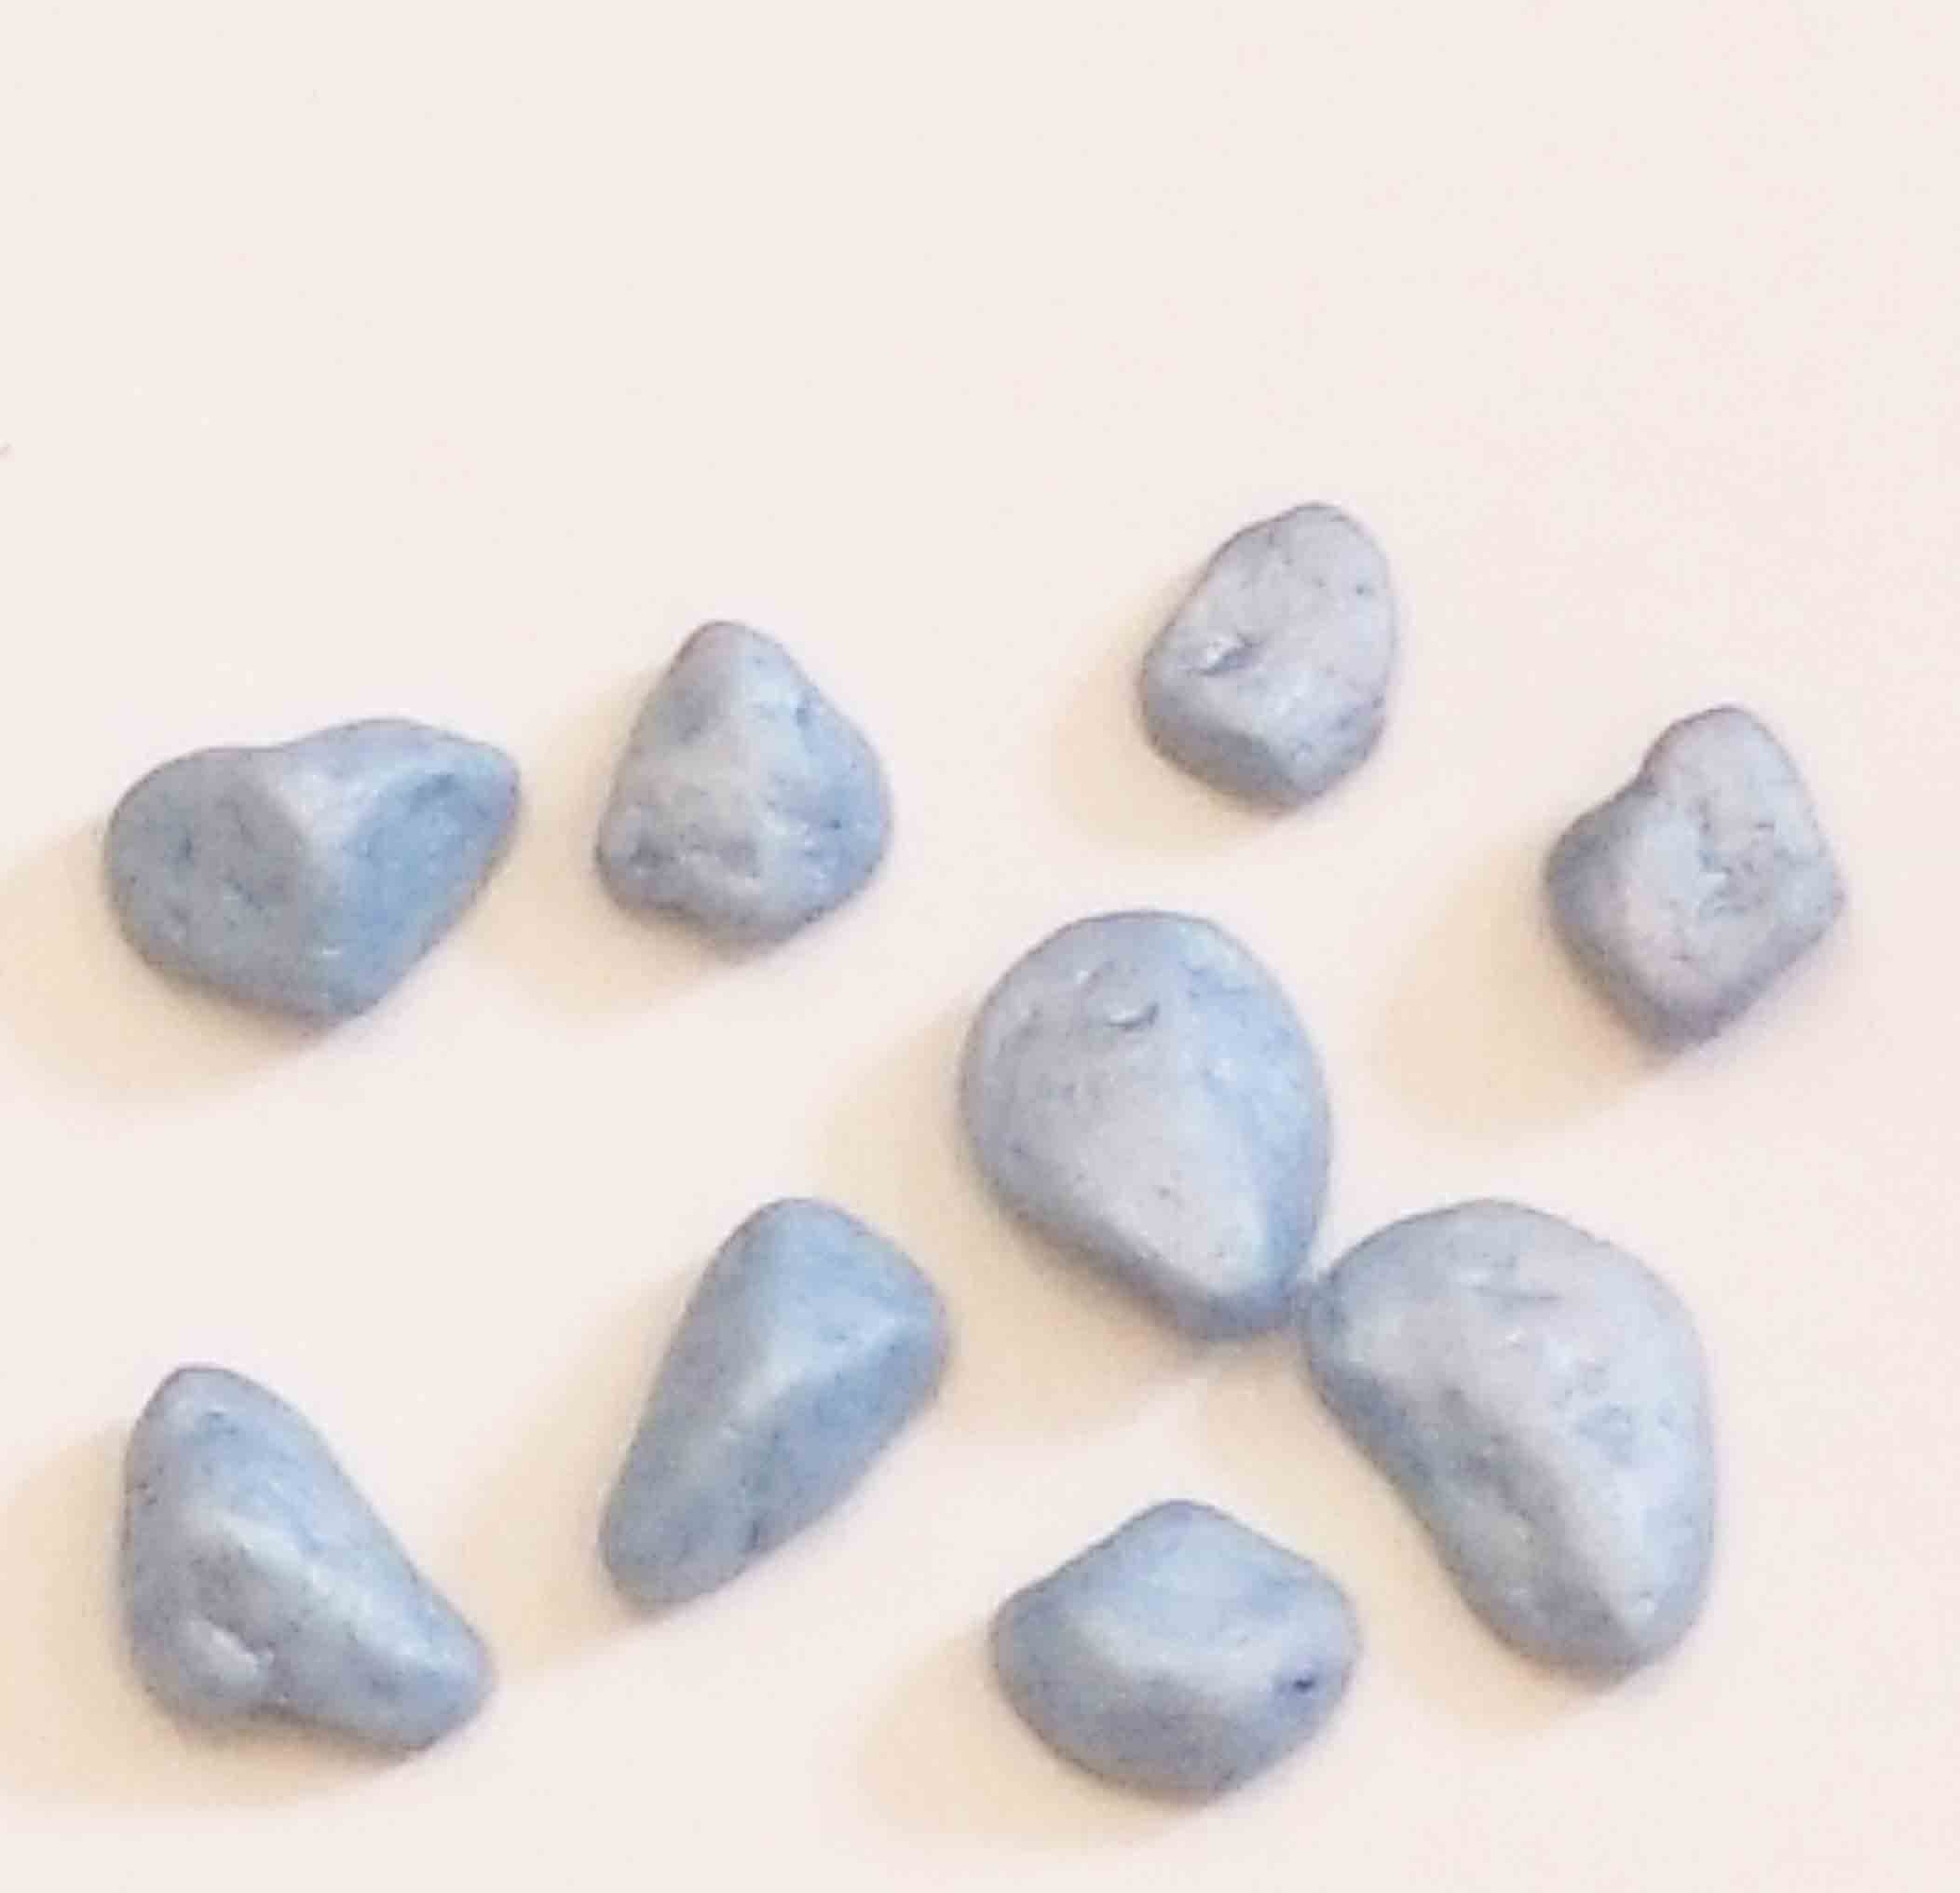 4862 - 15-20 mm Matte Blue Stones - 3.30 bag, 3.10/10